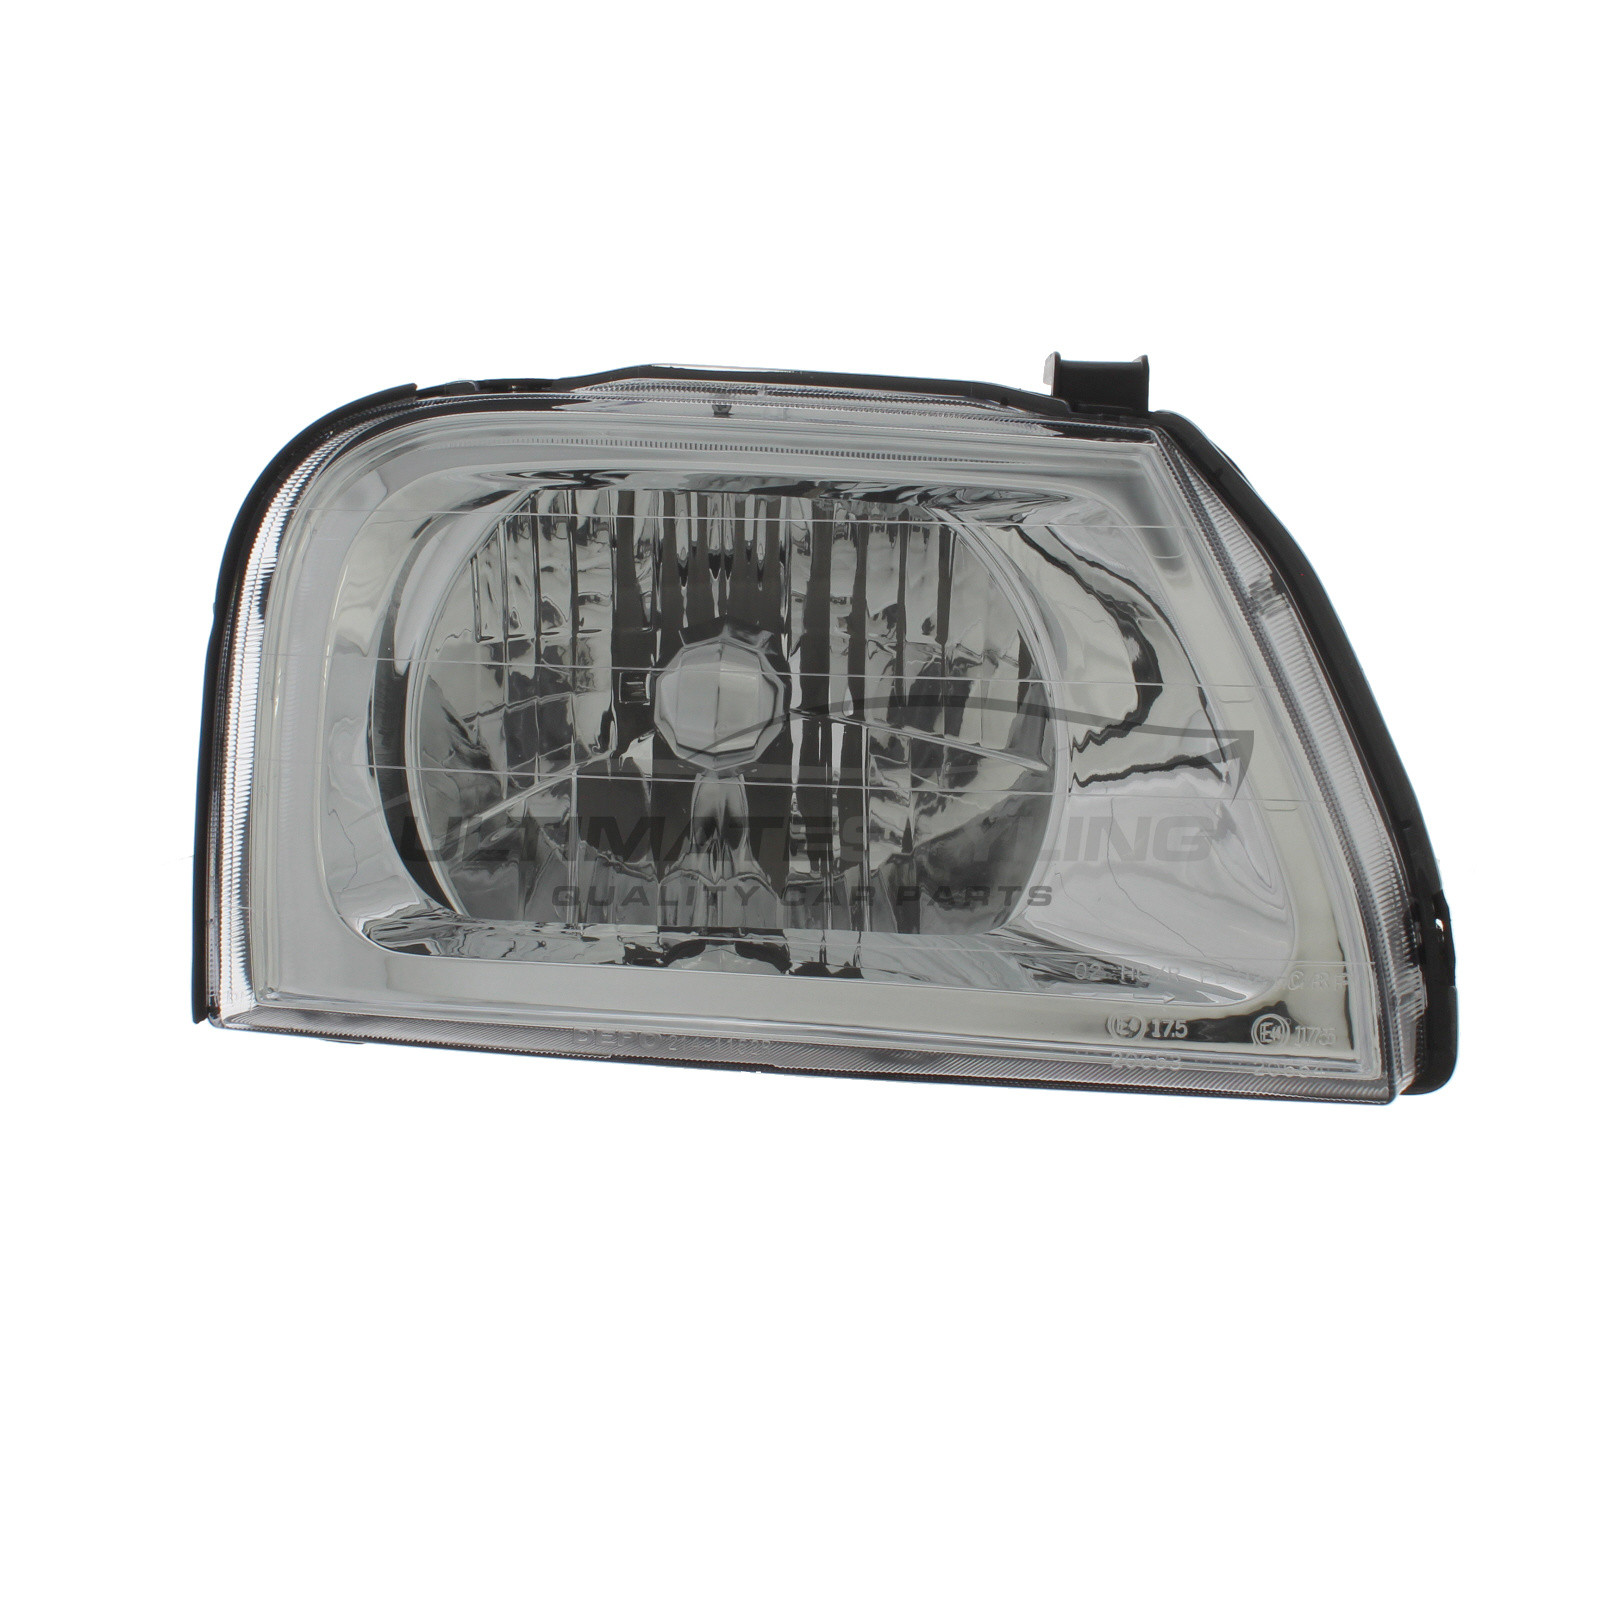 L200 Driver Side Offside Headlight Headlamp Unit 2010-2014 